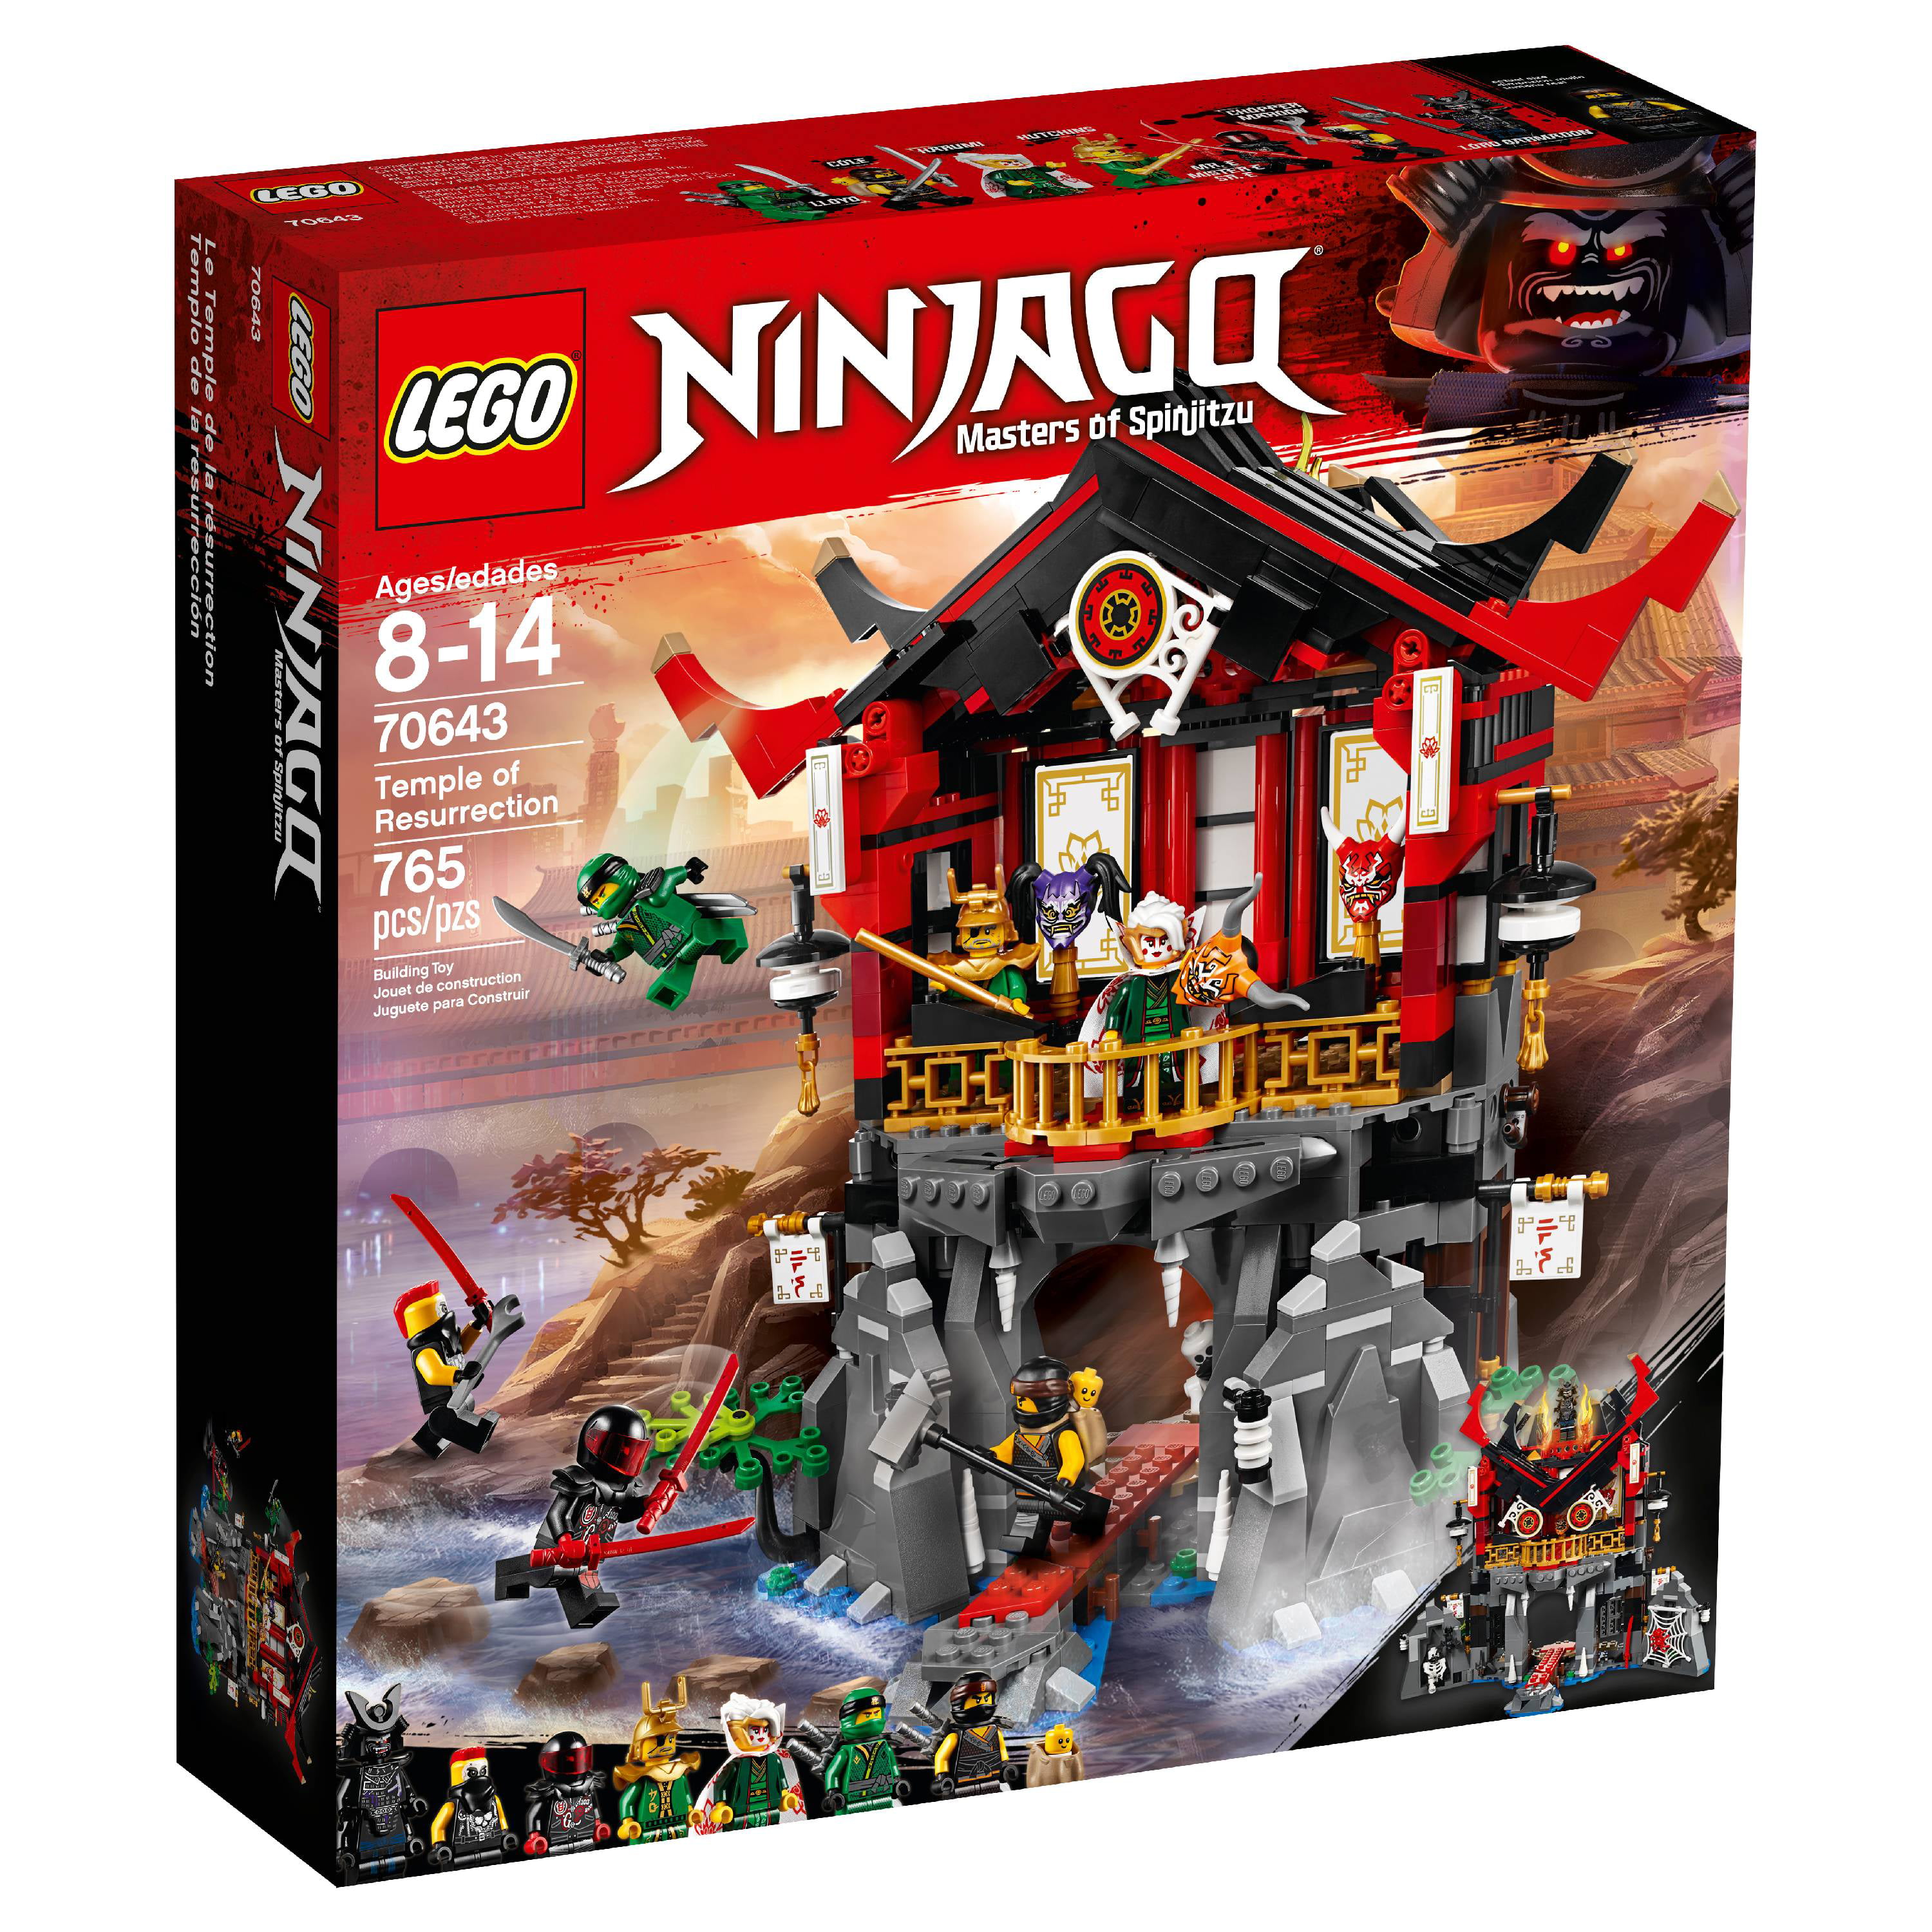 LEGO Ninjago Temple of Resurrection 